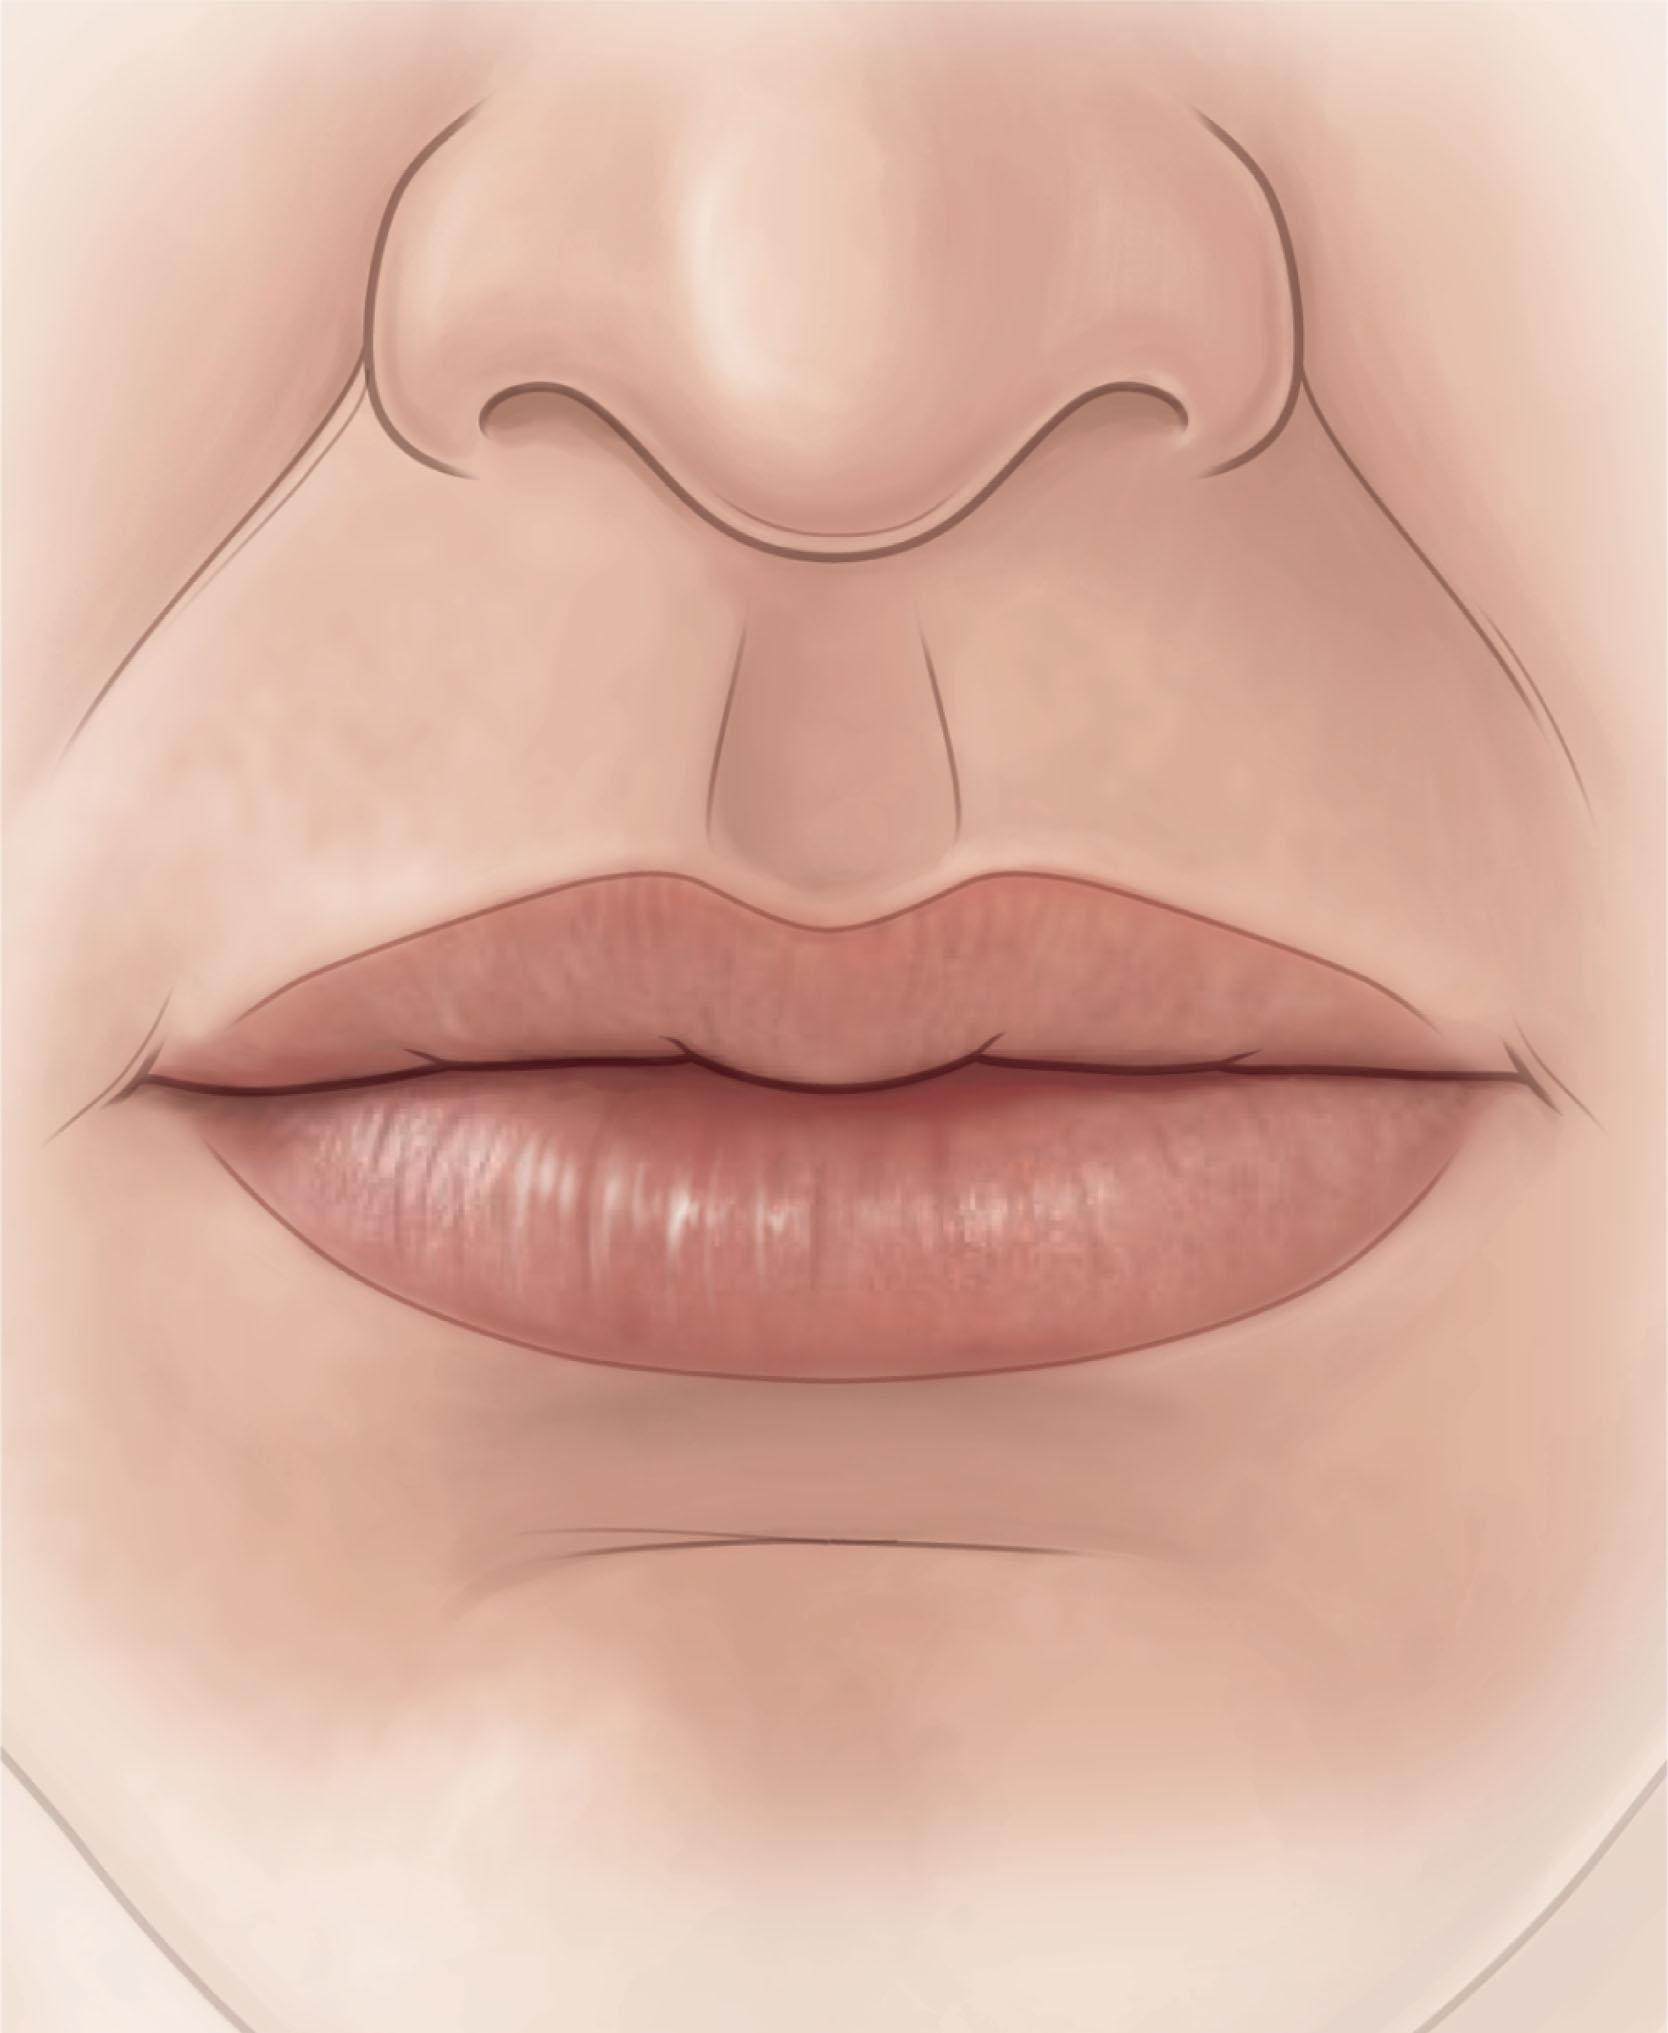 Figure 11.1, The aesthetic landmarks of the lips.